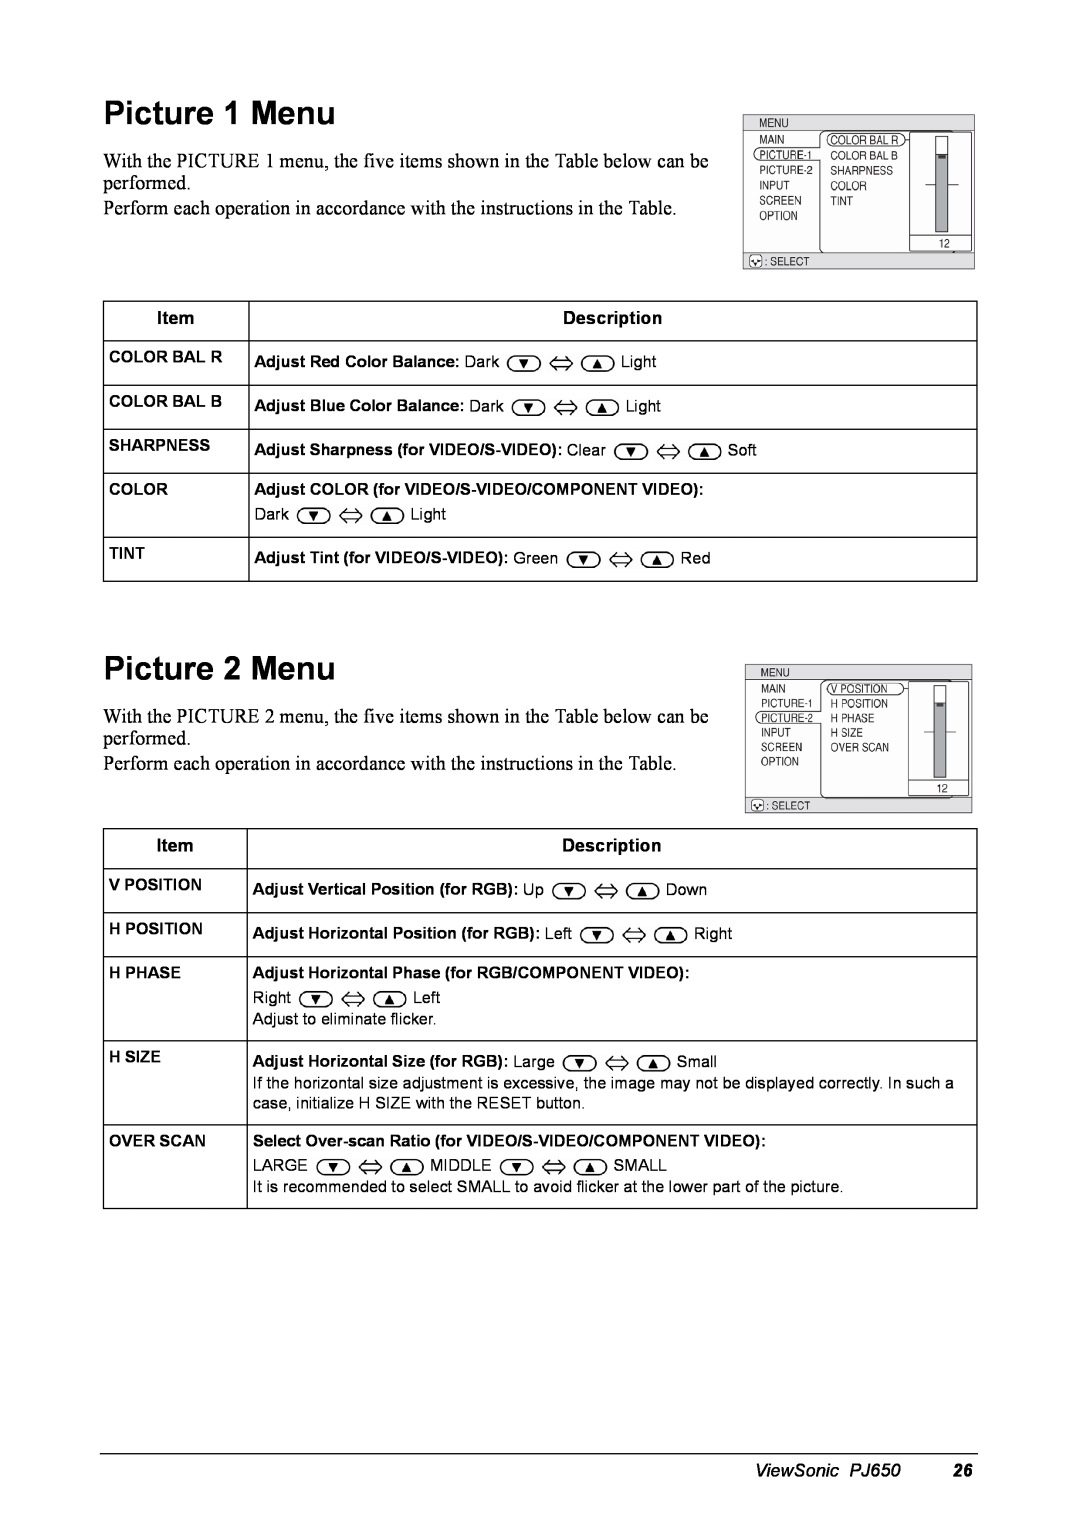 ViewSonic PJ650 manual Picture 1 Menu, Picture 2 Menu, Description 